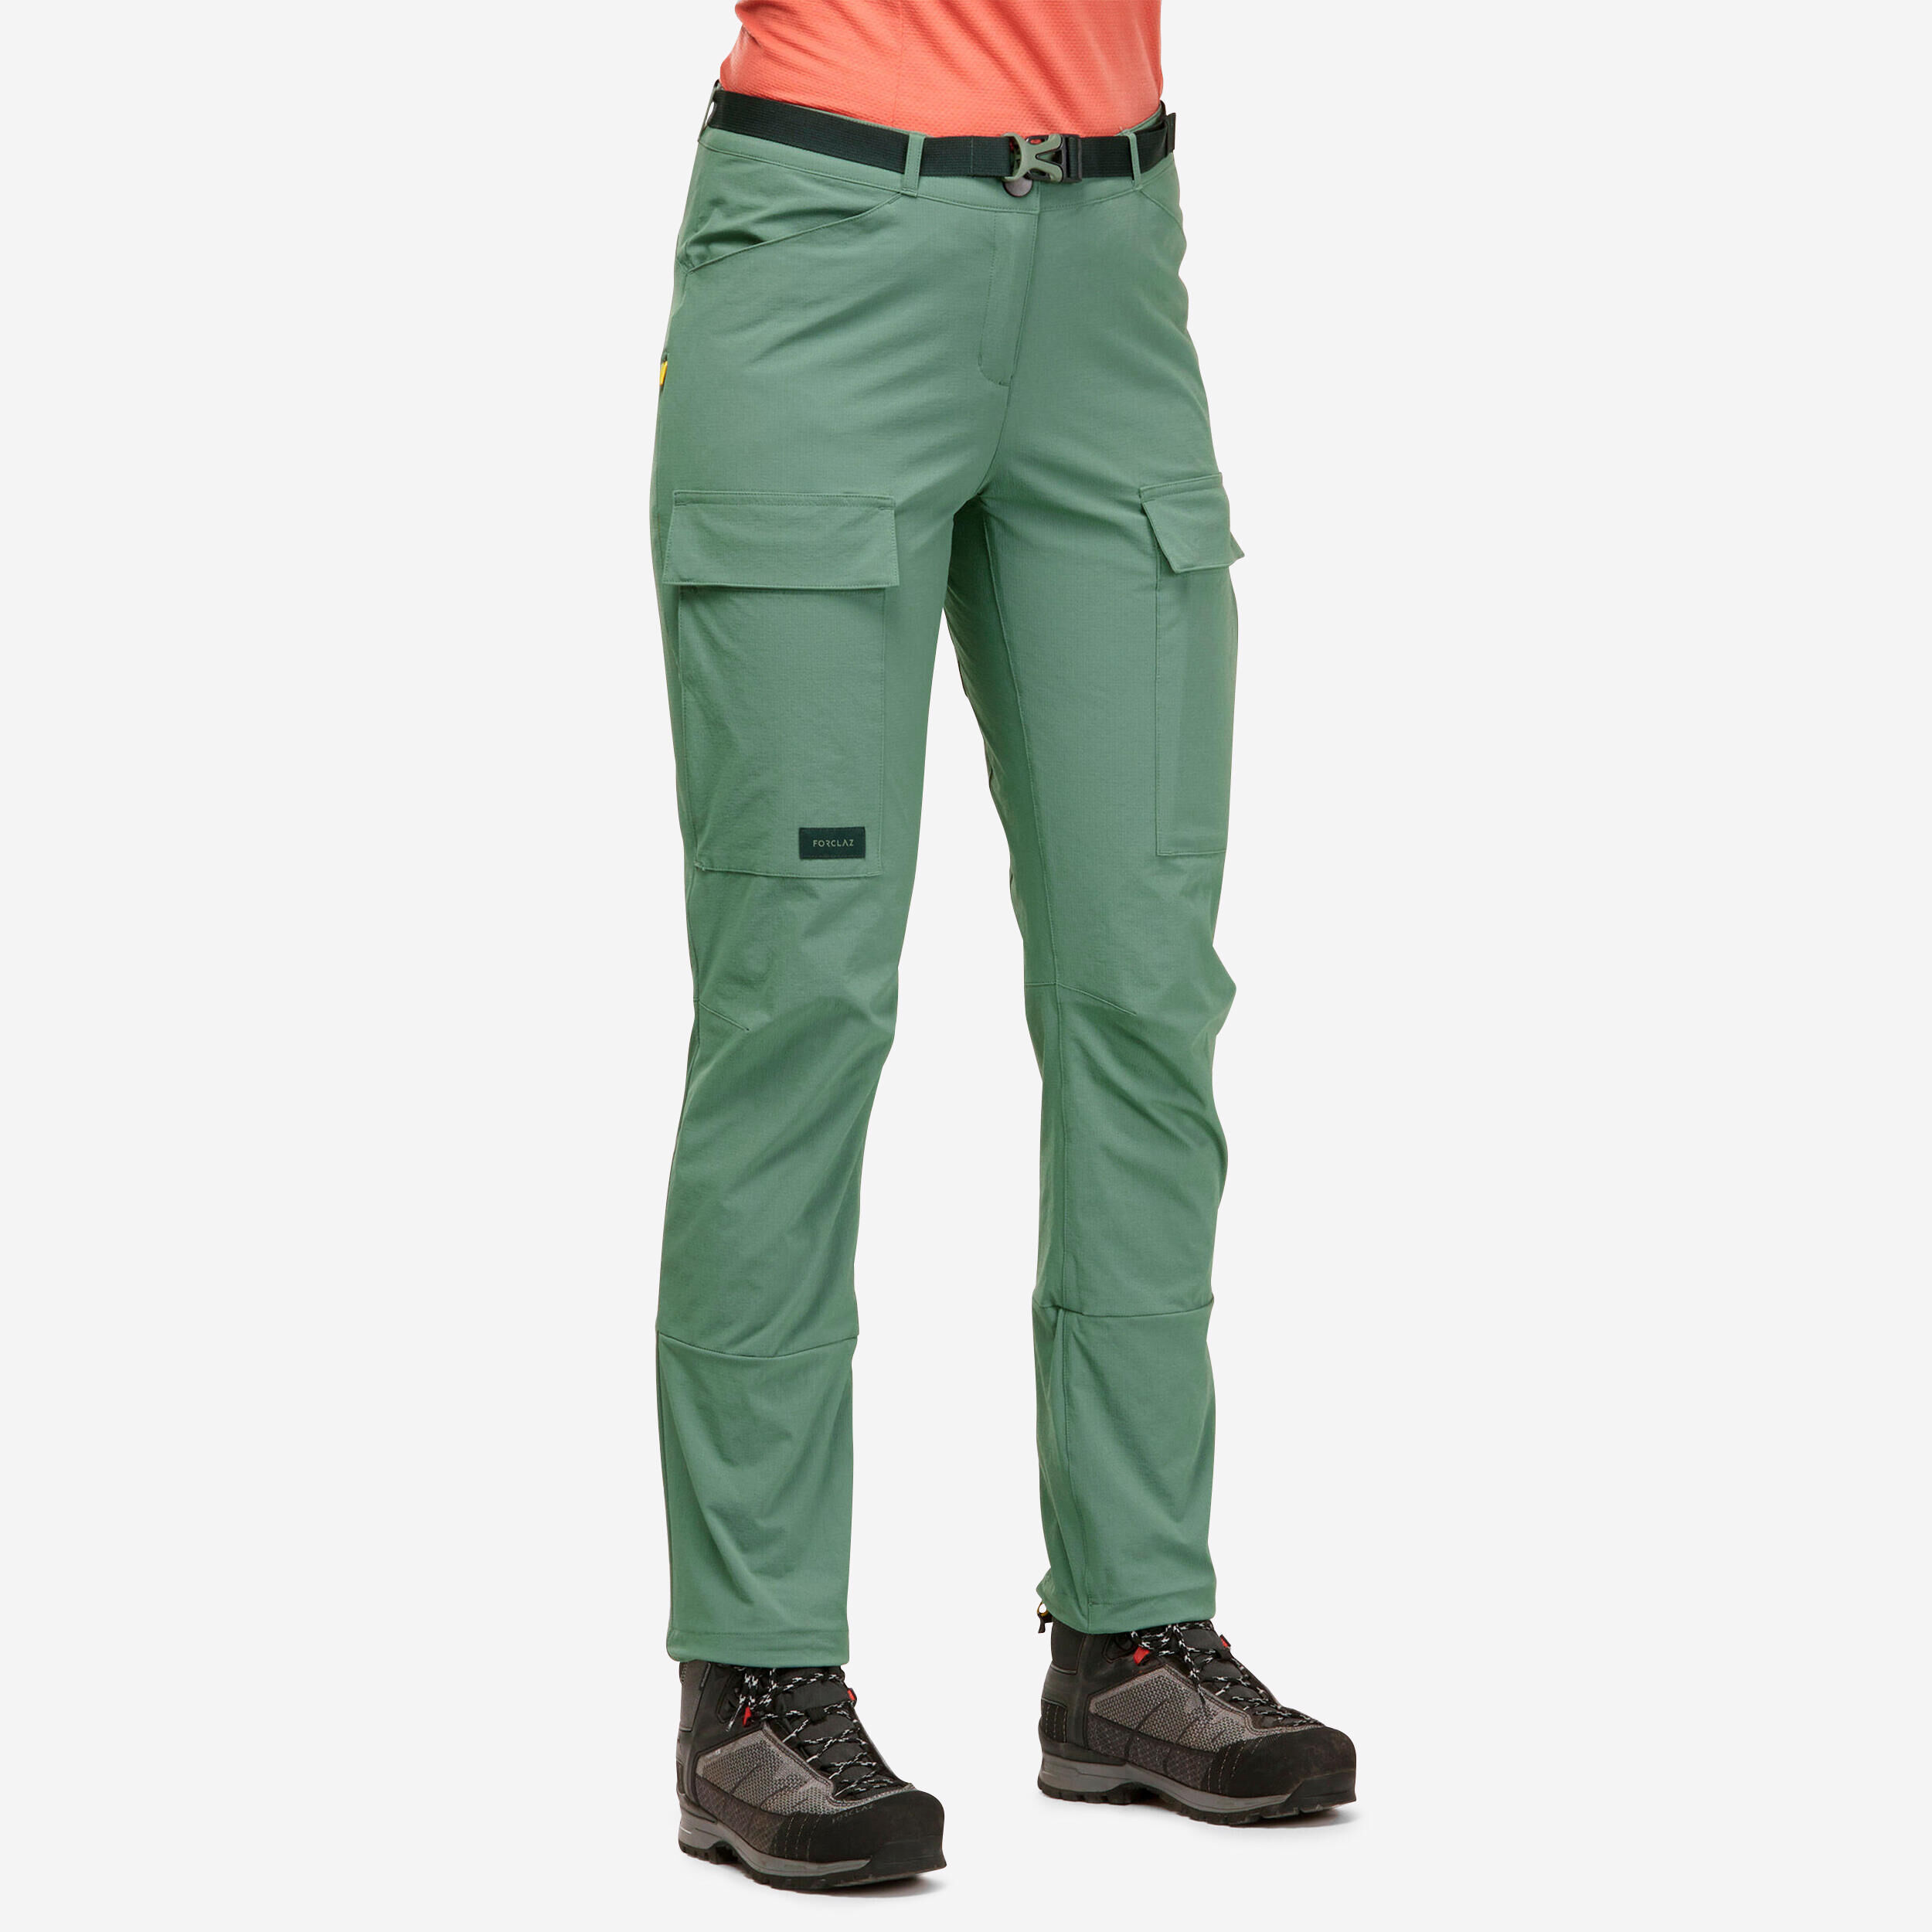 FORCLAZ Women's Anti-mosquito Trousers - Tropic 900 - green